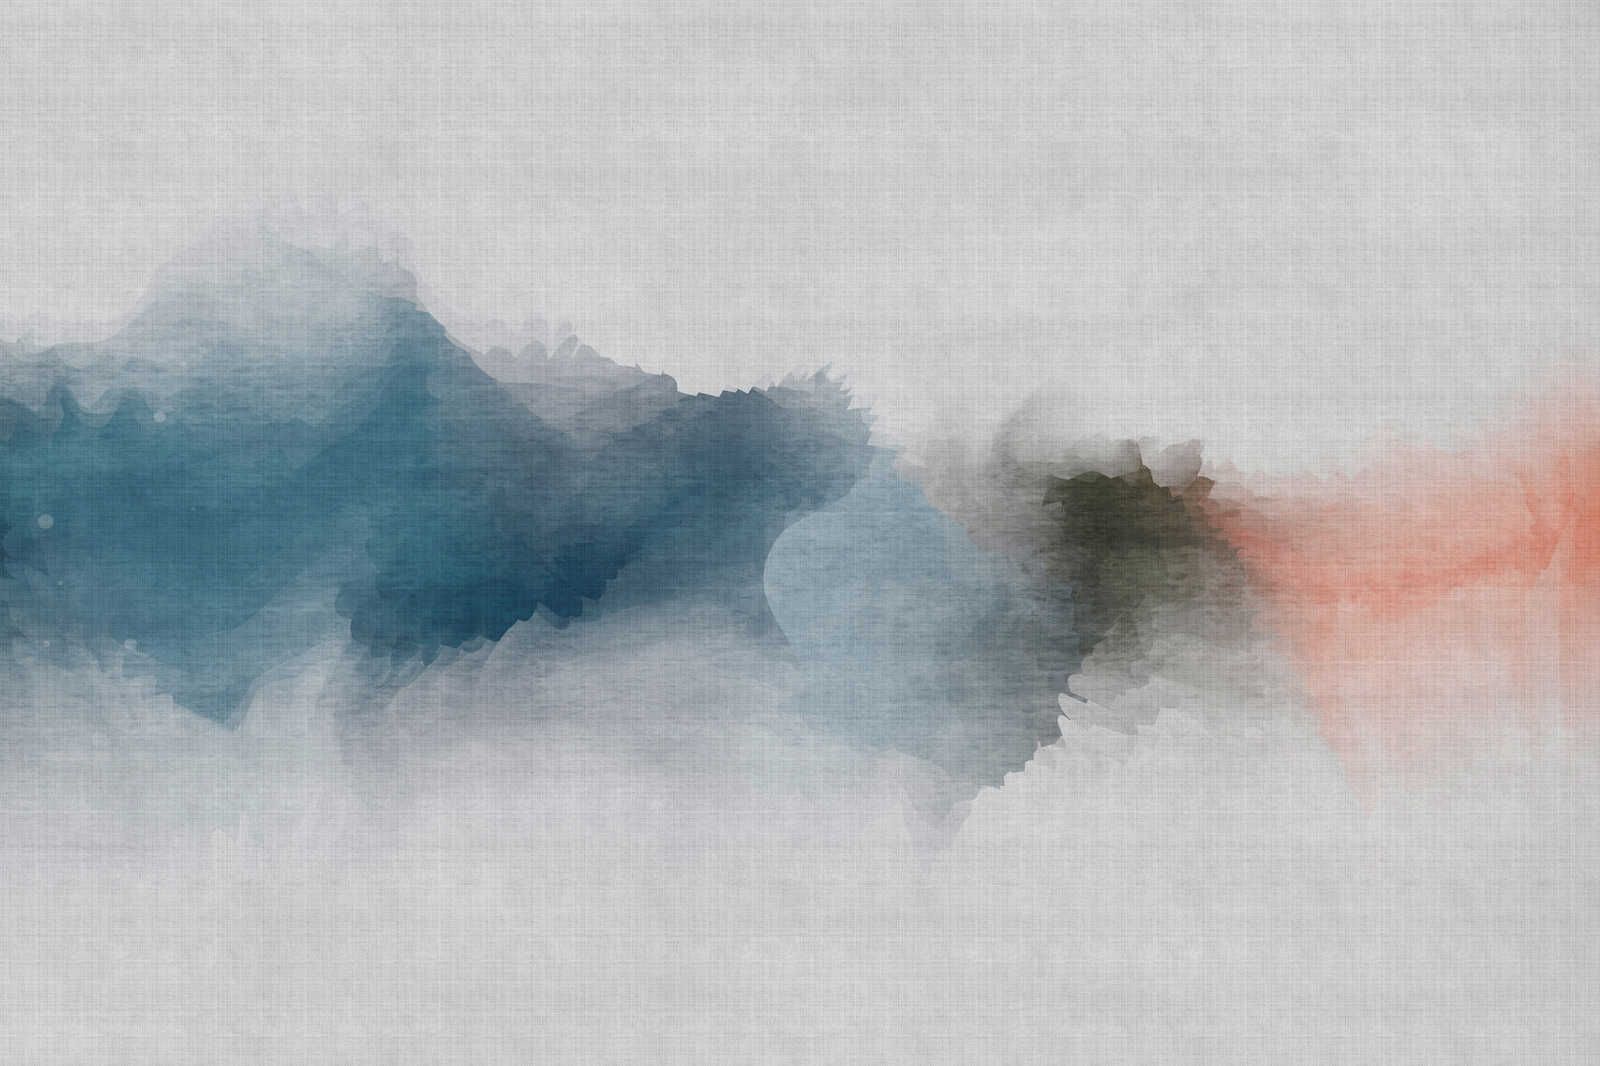             Daydream 1 - Toile minimaliste style aquarelle - aspect lin naturel - 1,20 m x 0,80 m
        